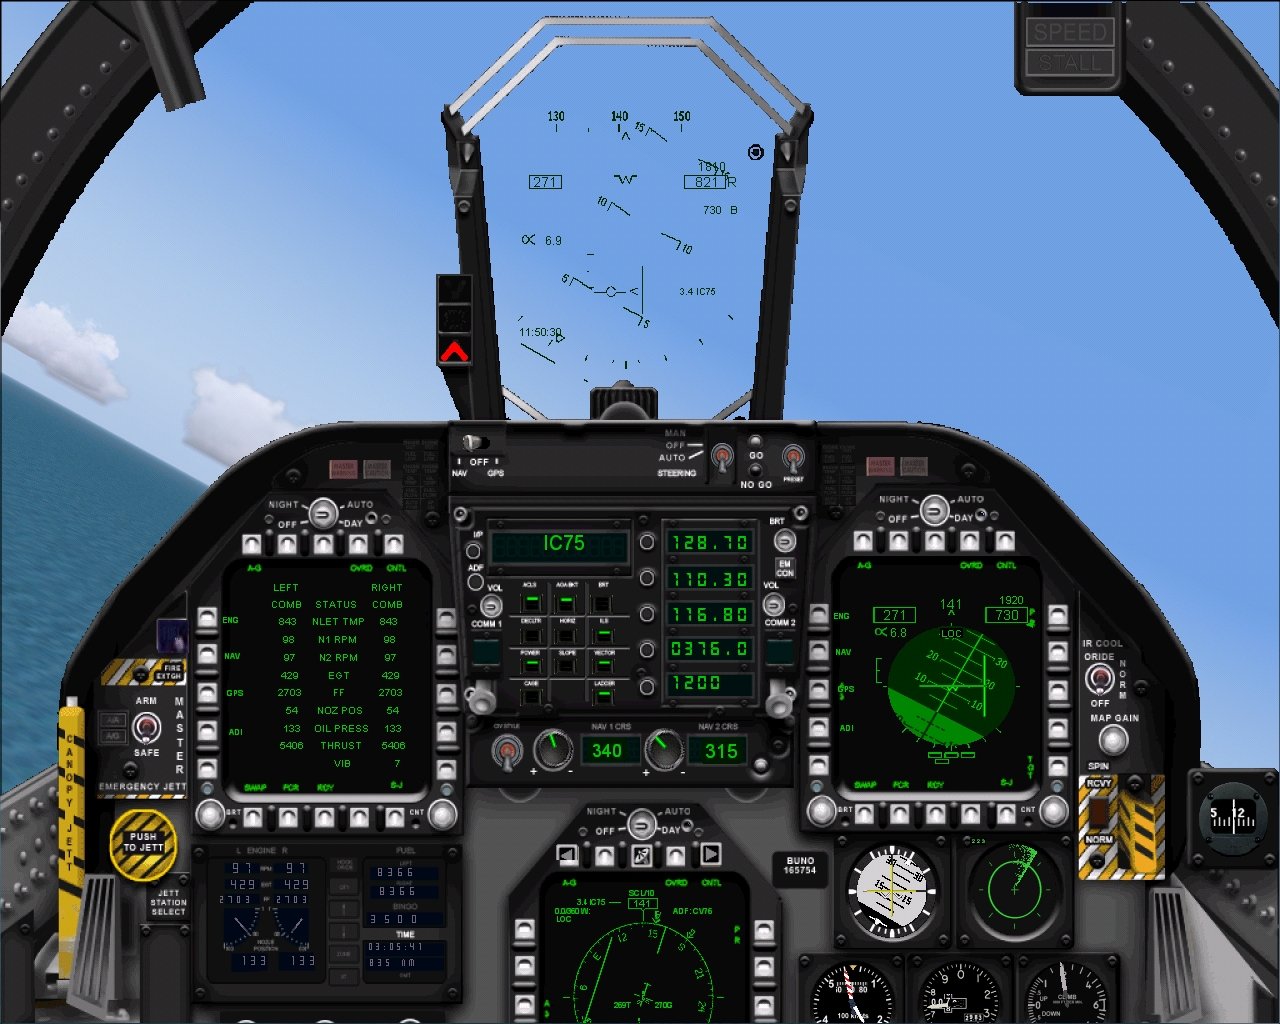 https://blogger.googleusercontent.com/img/b/R29vZ2xl/AVvXsEjiuDB1goJ0QSWBZOzM6hUF_ofvuo2tMcvug_pZscEJxAW7z4ii95Y1aGa0AX3KriTIBj32TCGhSbcqdtSgx8QQyoEvTj4B2IJhkDxPdvSTAWN1Bu8wzftbRPwW75quNP7rOpYO9FEkn-bc/s1600/FA-18+Hornet+Cockpit+%25283%2529.jpg